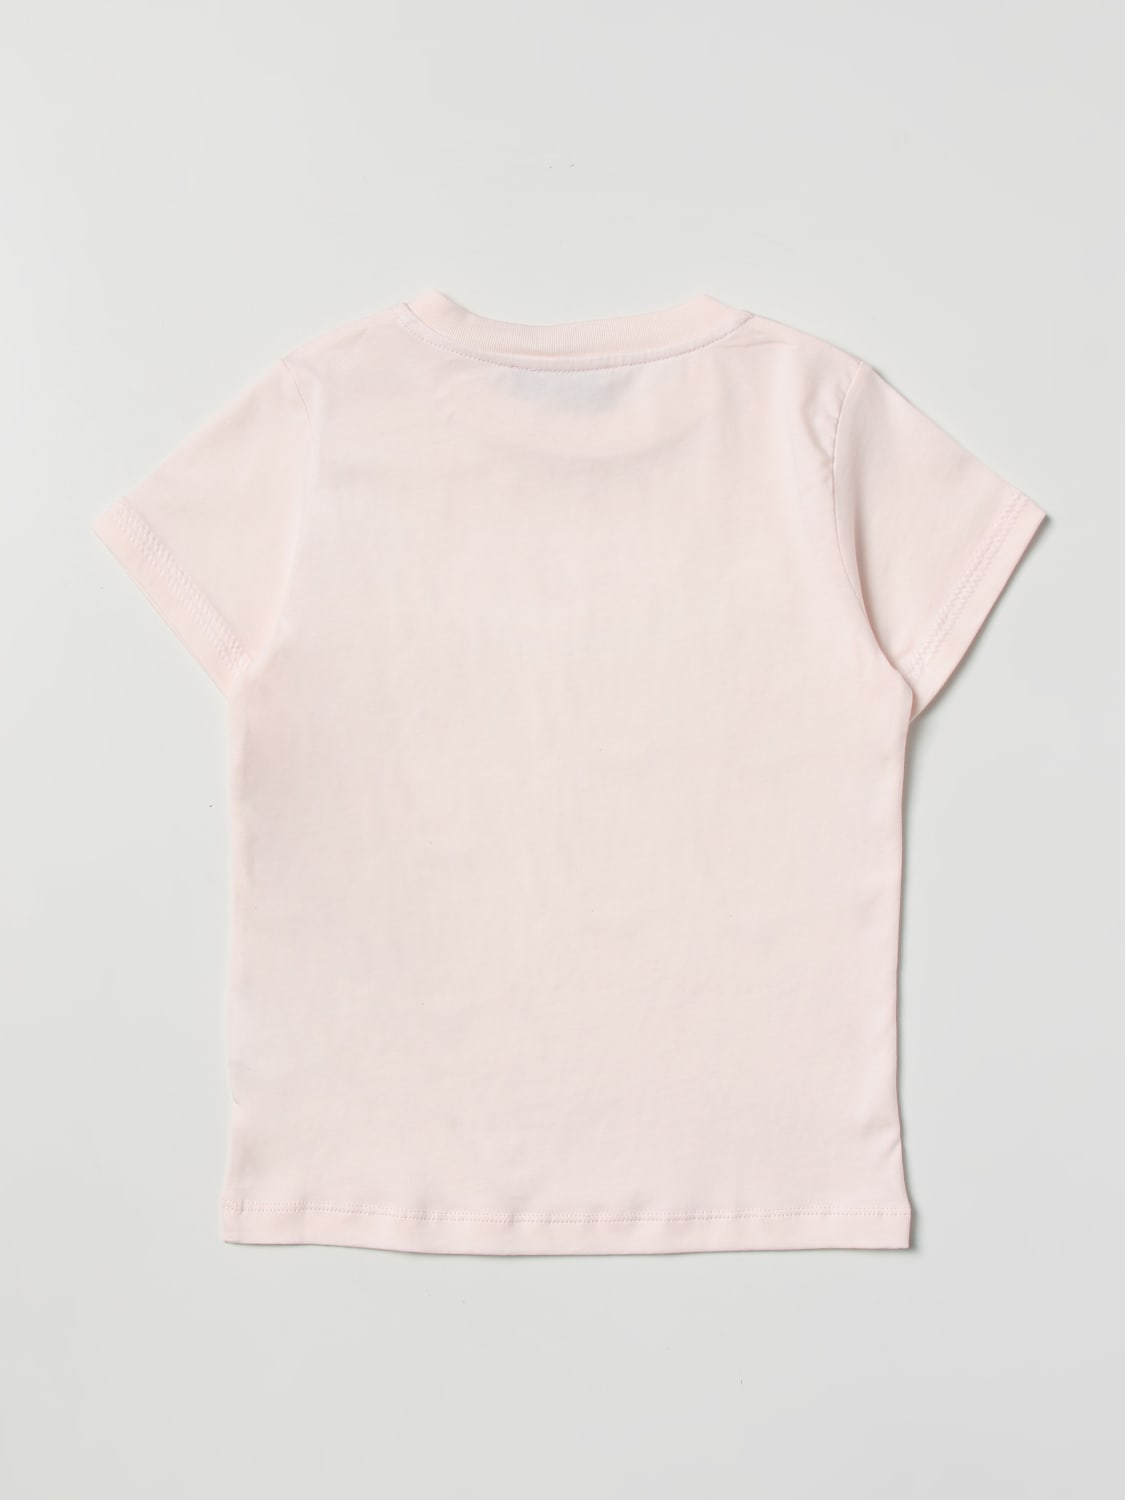 T-Shirt Missoni: Missoni Mädchen T-Shirt pink 2